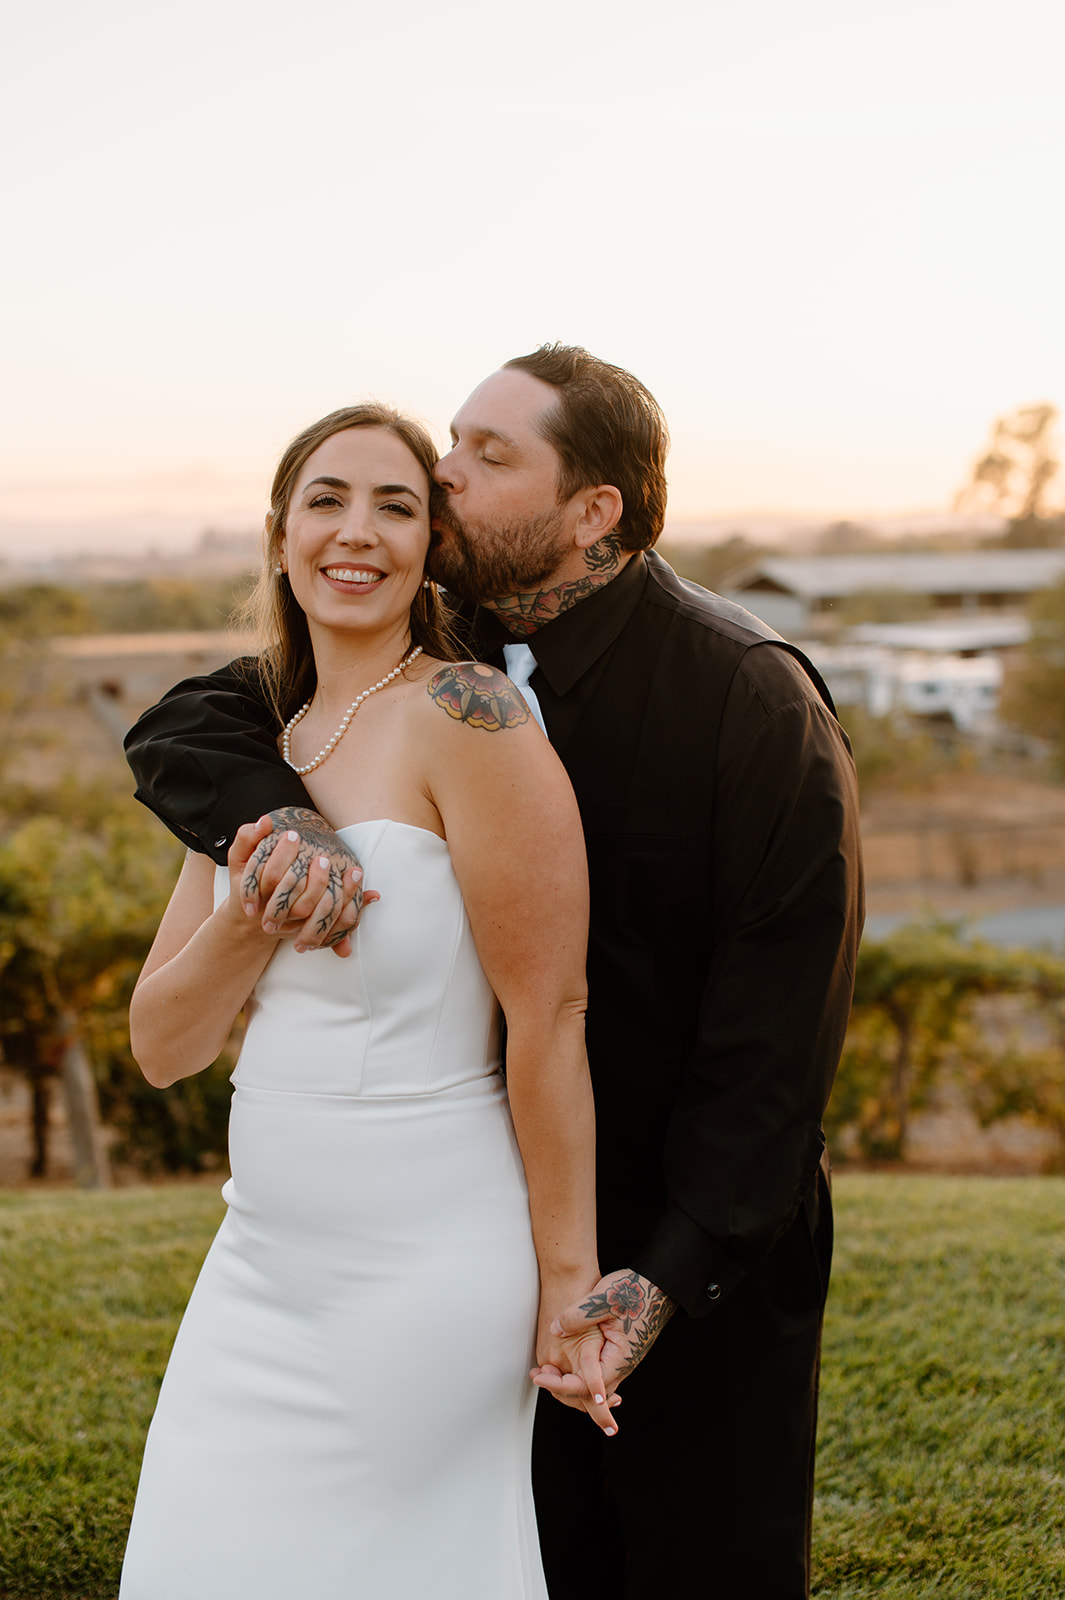 Sydney Jai Photography - Petaluma wedding, bride and groom photos